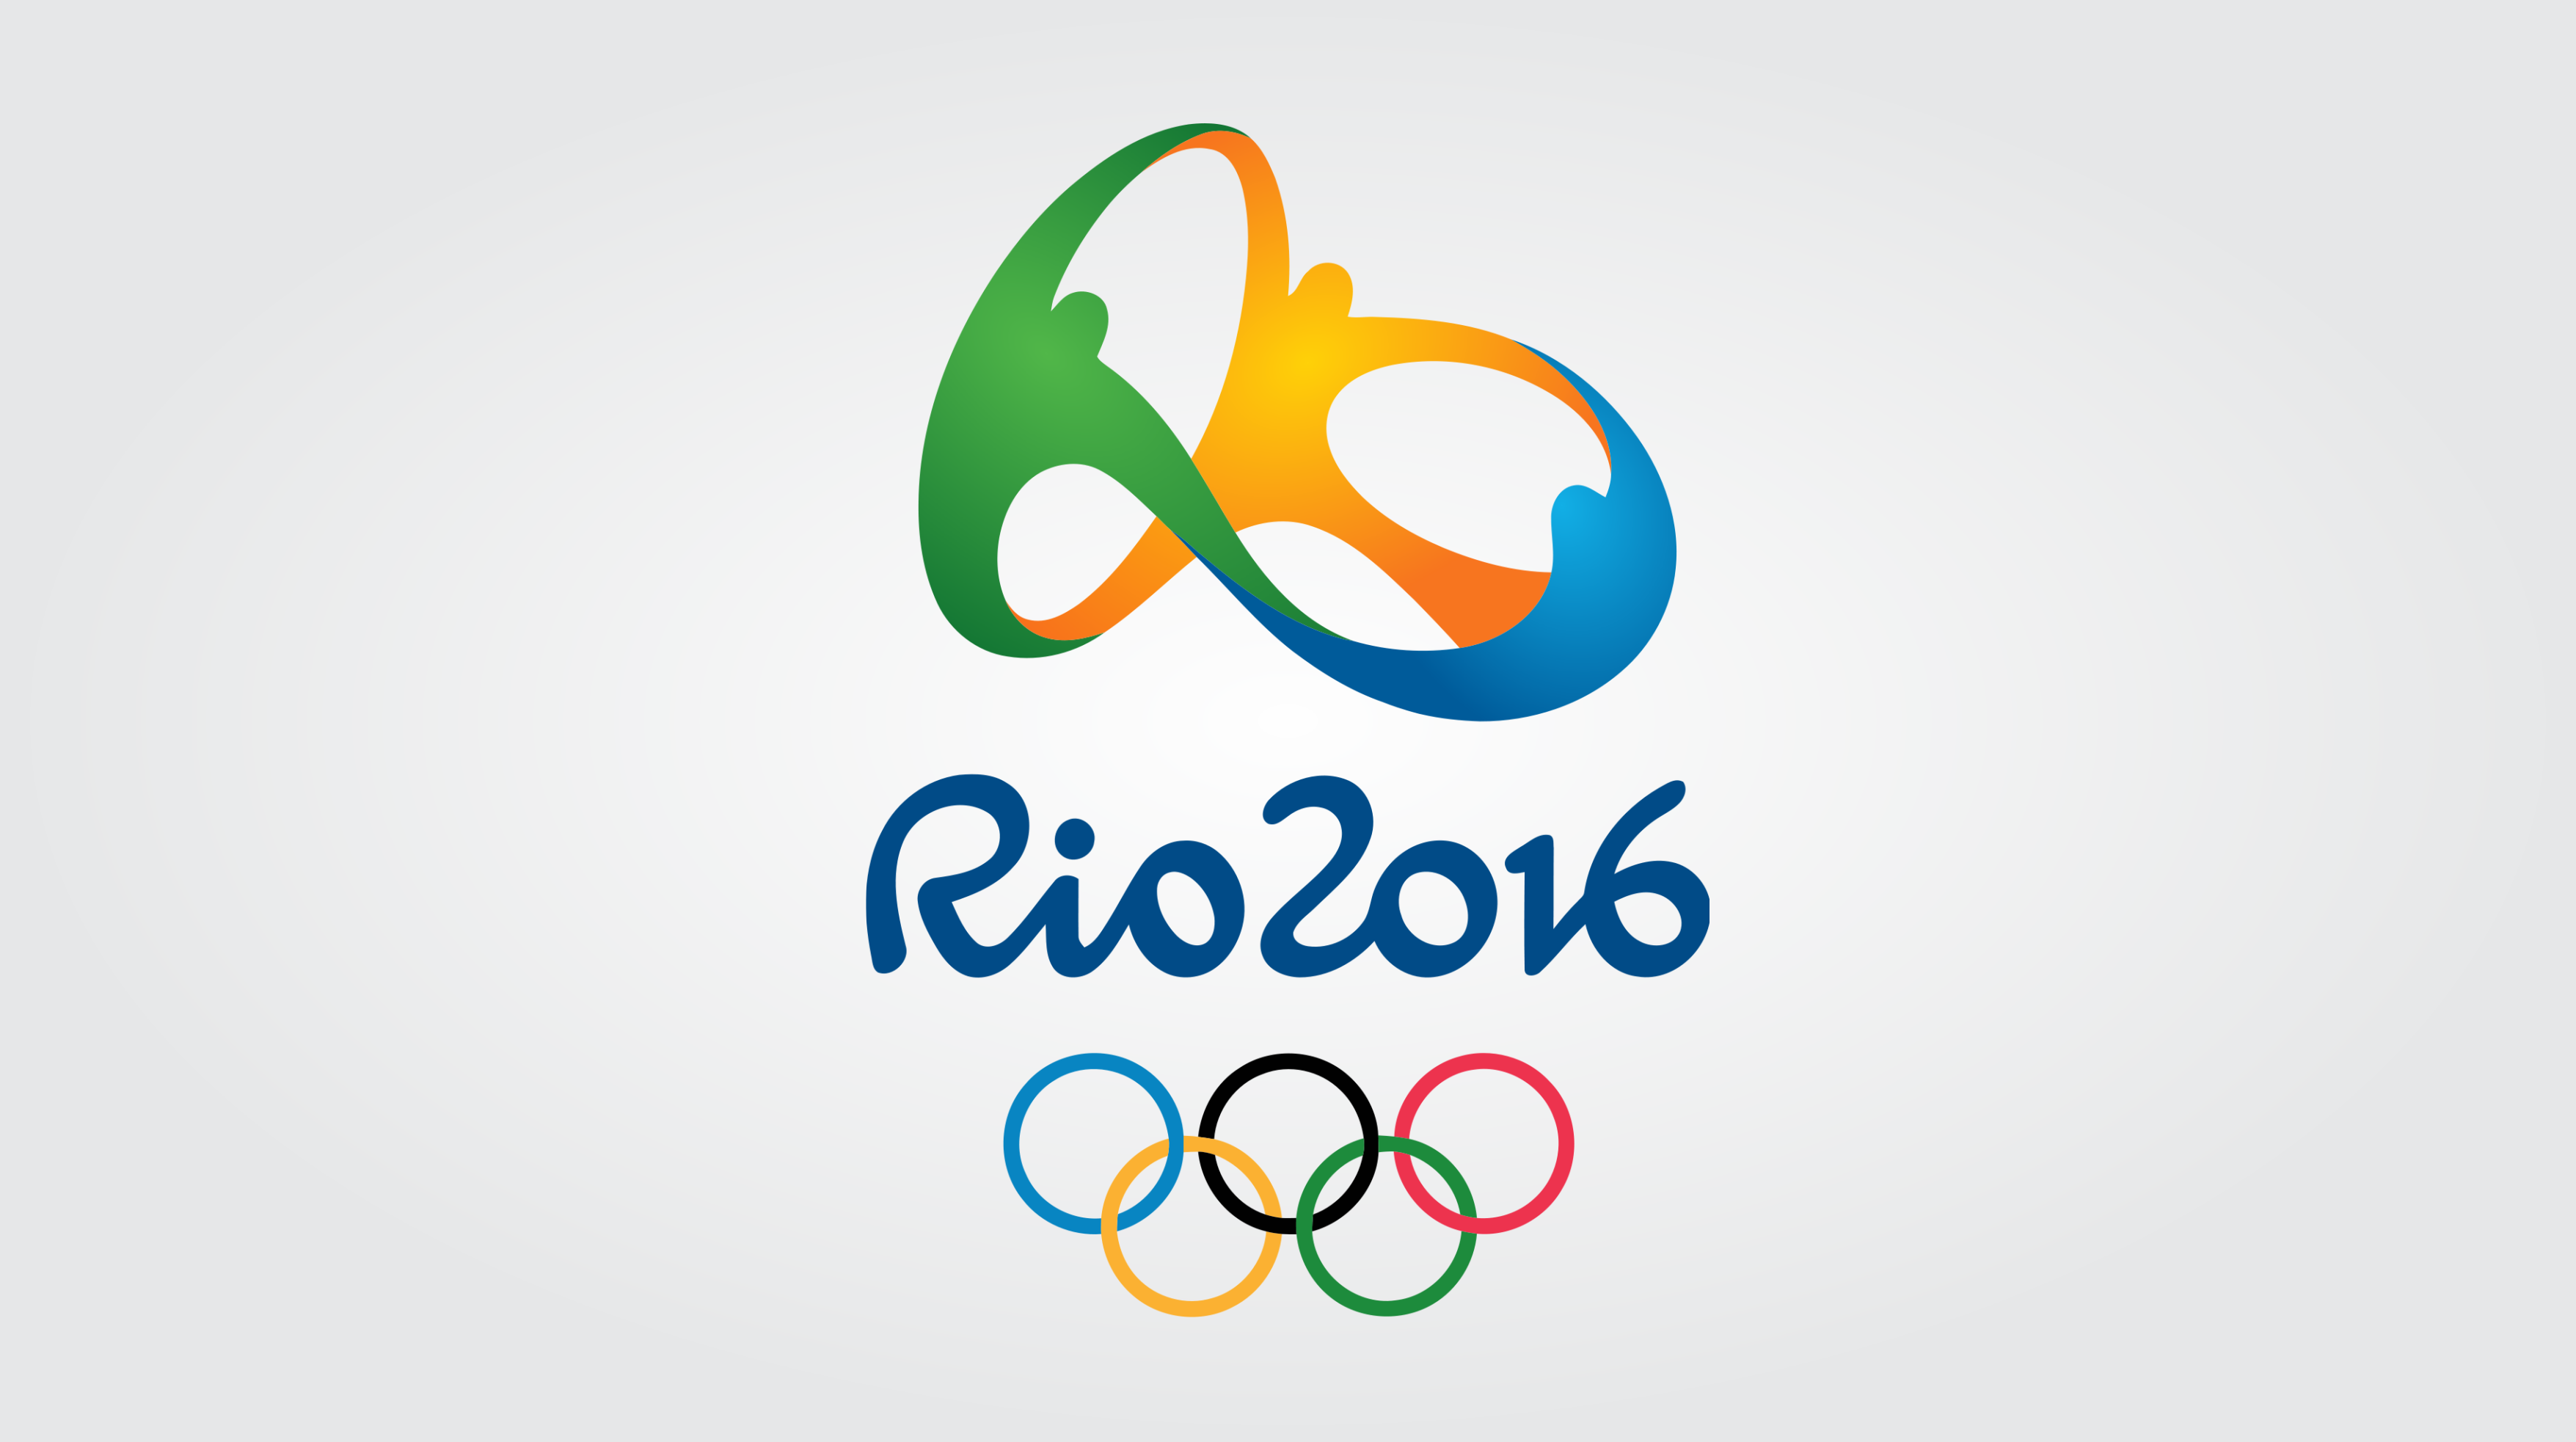 Reprodução/Comitê Olímpico Brasileiro